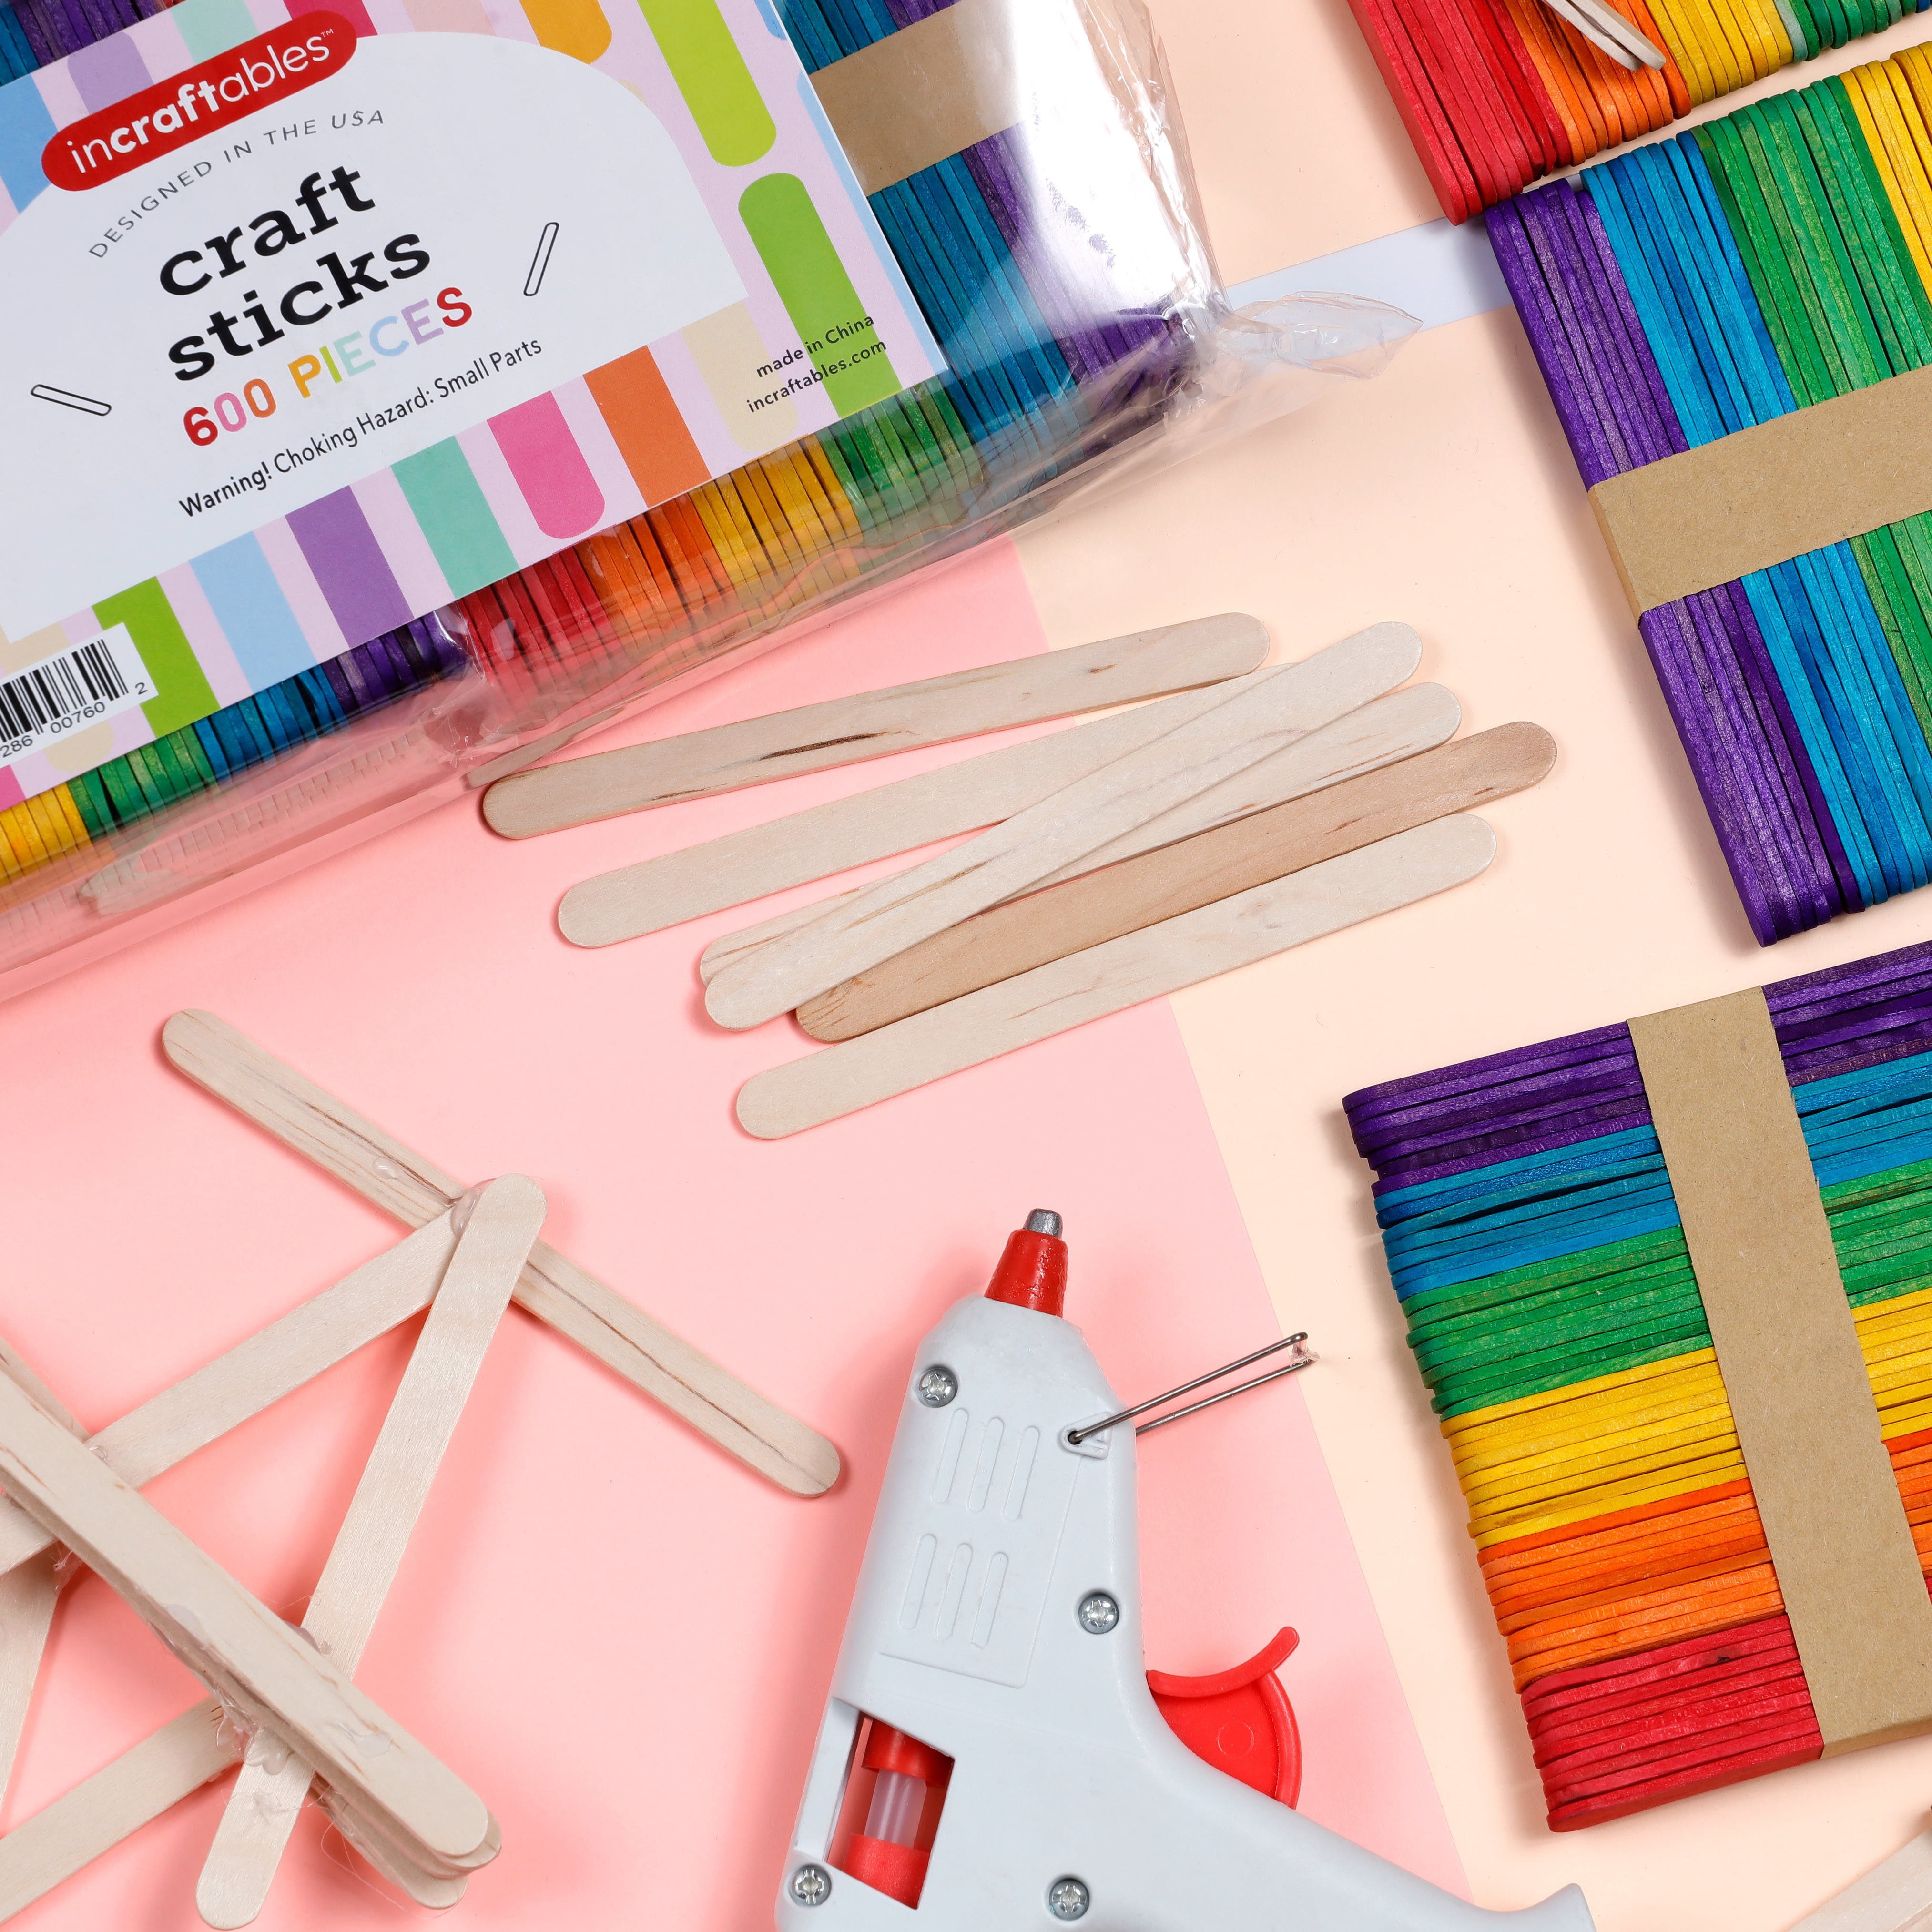 Colorations® Wooden Building Craft Sticks - Set of 600 Sticks